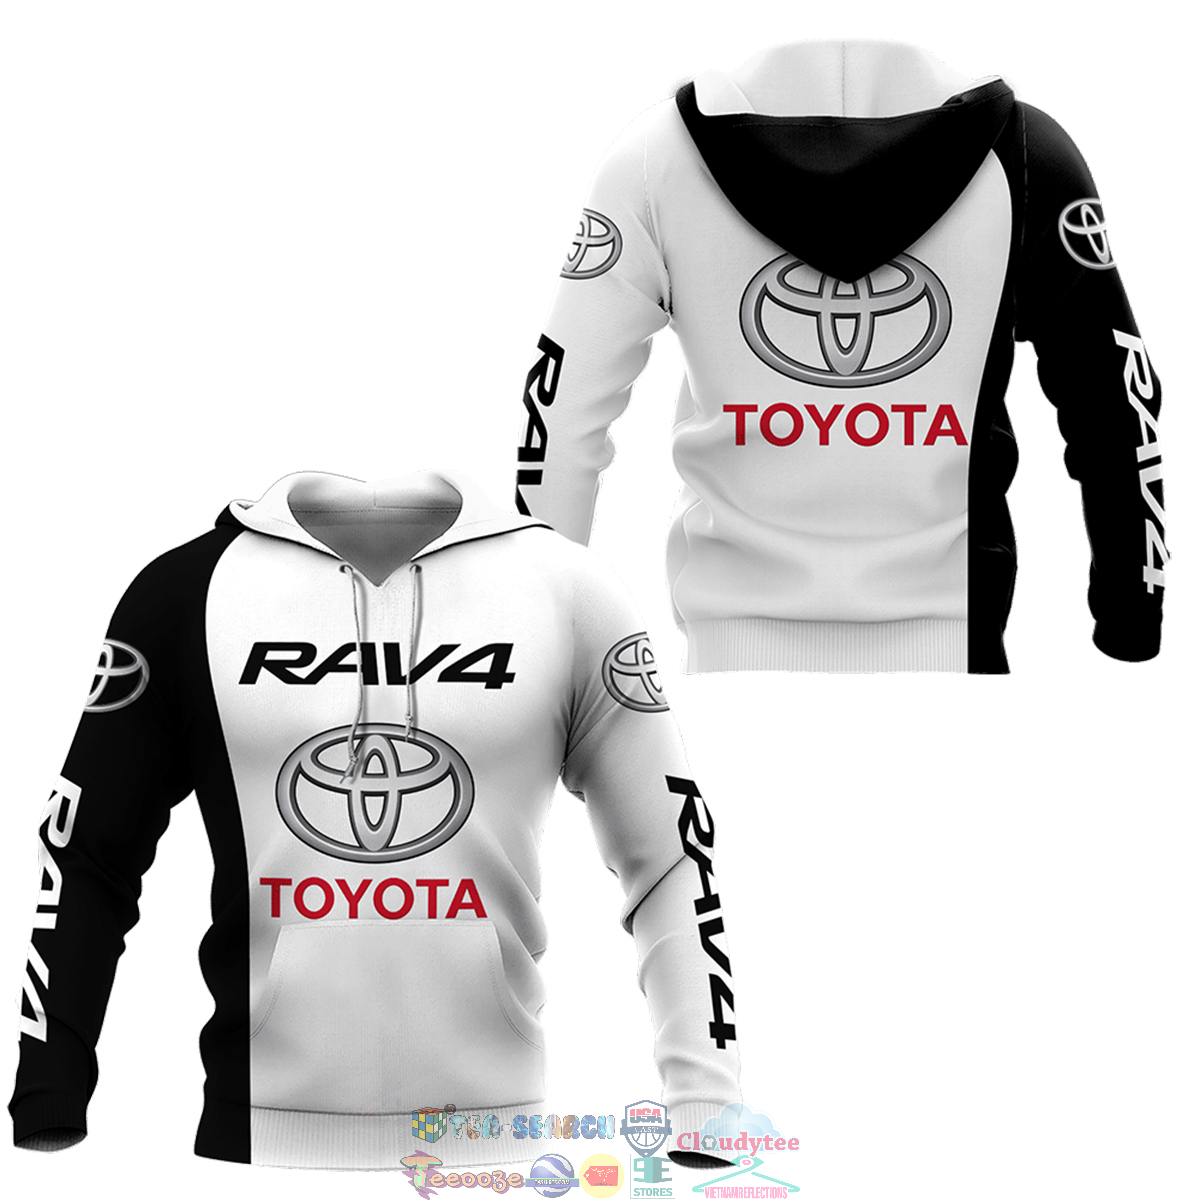 Toyota Rav4 ver 1 hoodie and t-shirt – Saleoff